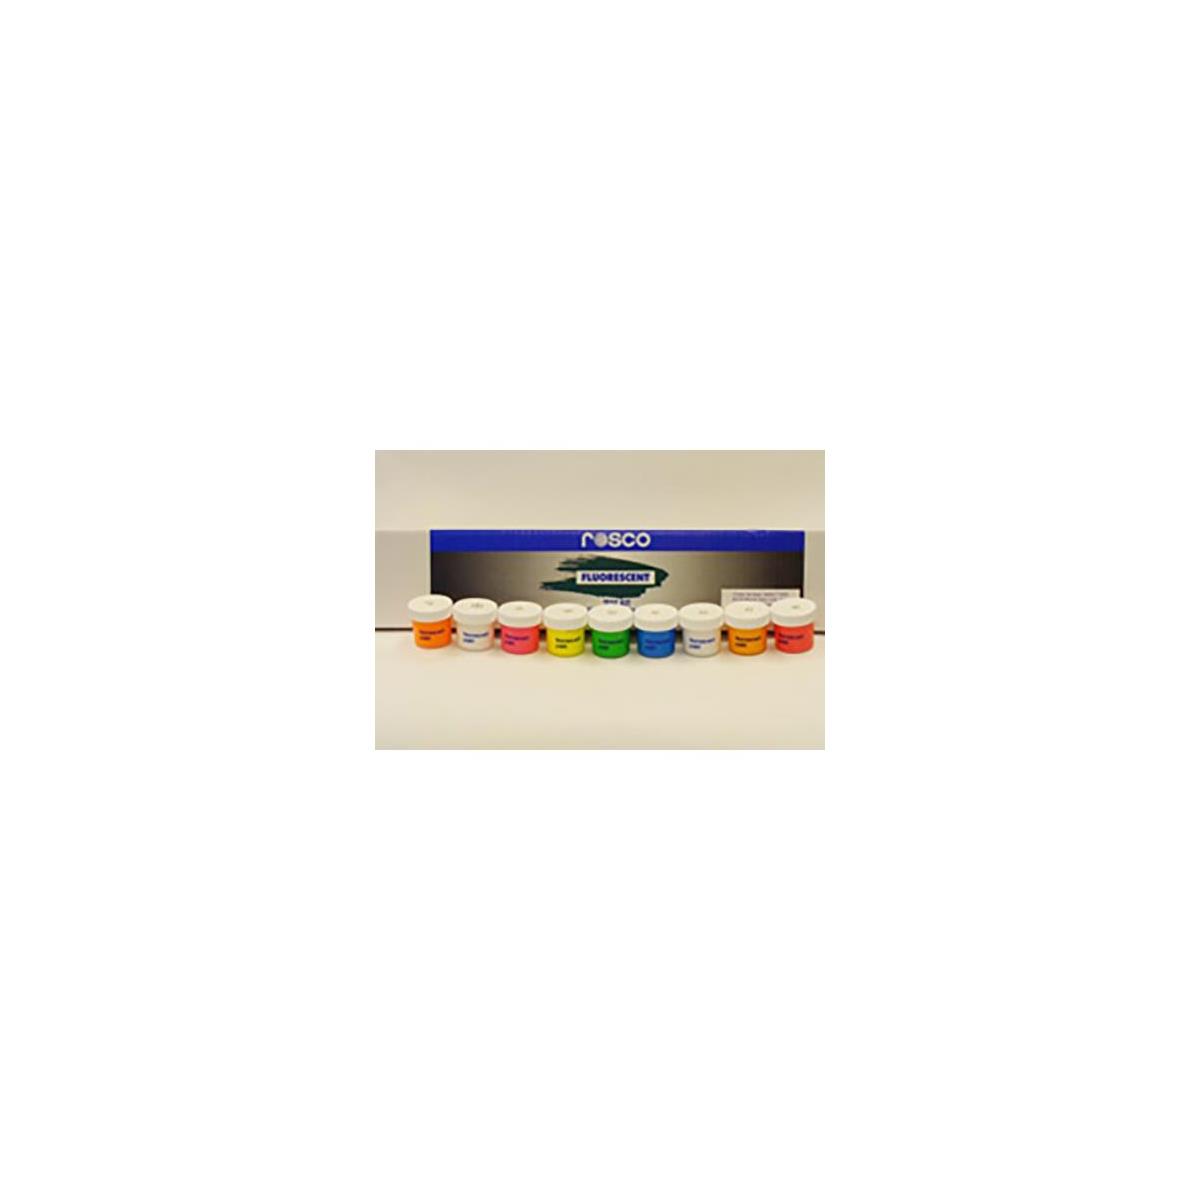 Image of Rosco 5700 Fluorescent Paint Kit